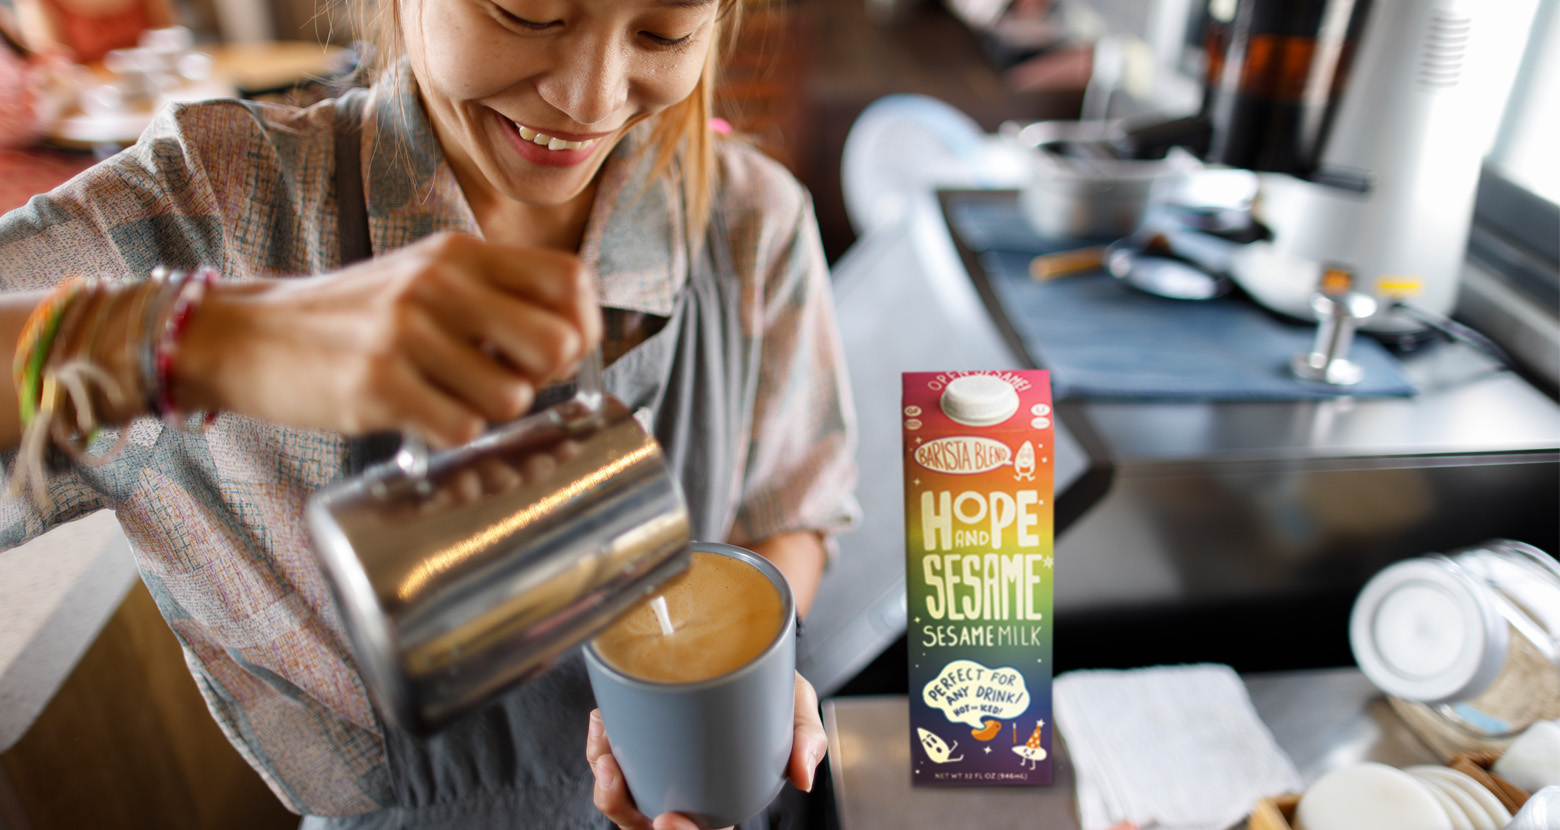 Hope and Sesame milk